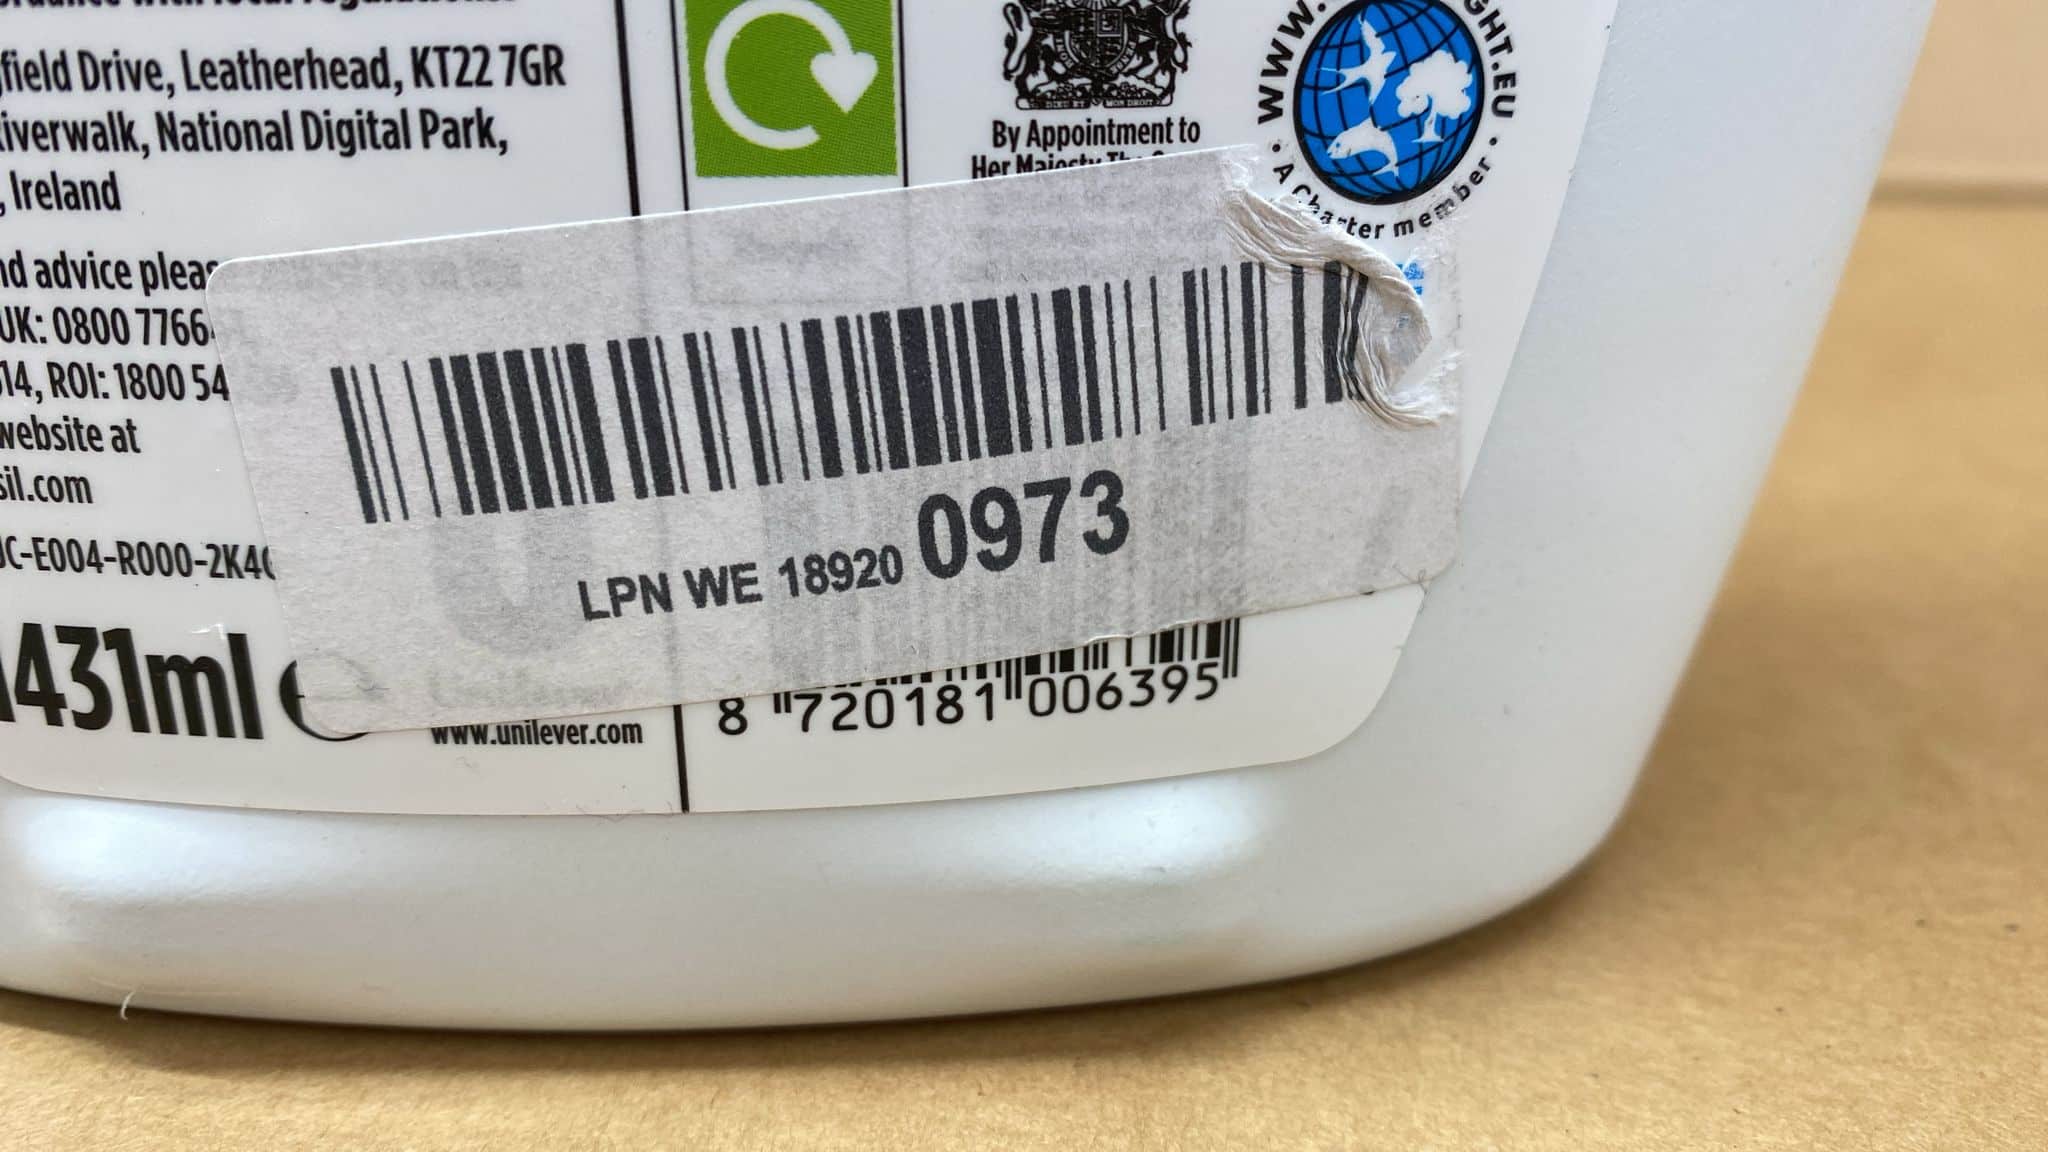 Persil Colour Liquid Laundry Detergent 53 Wash 1.431L 6395